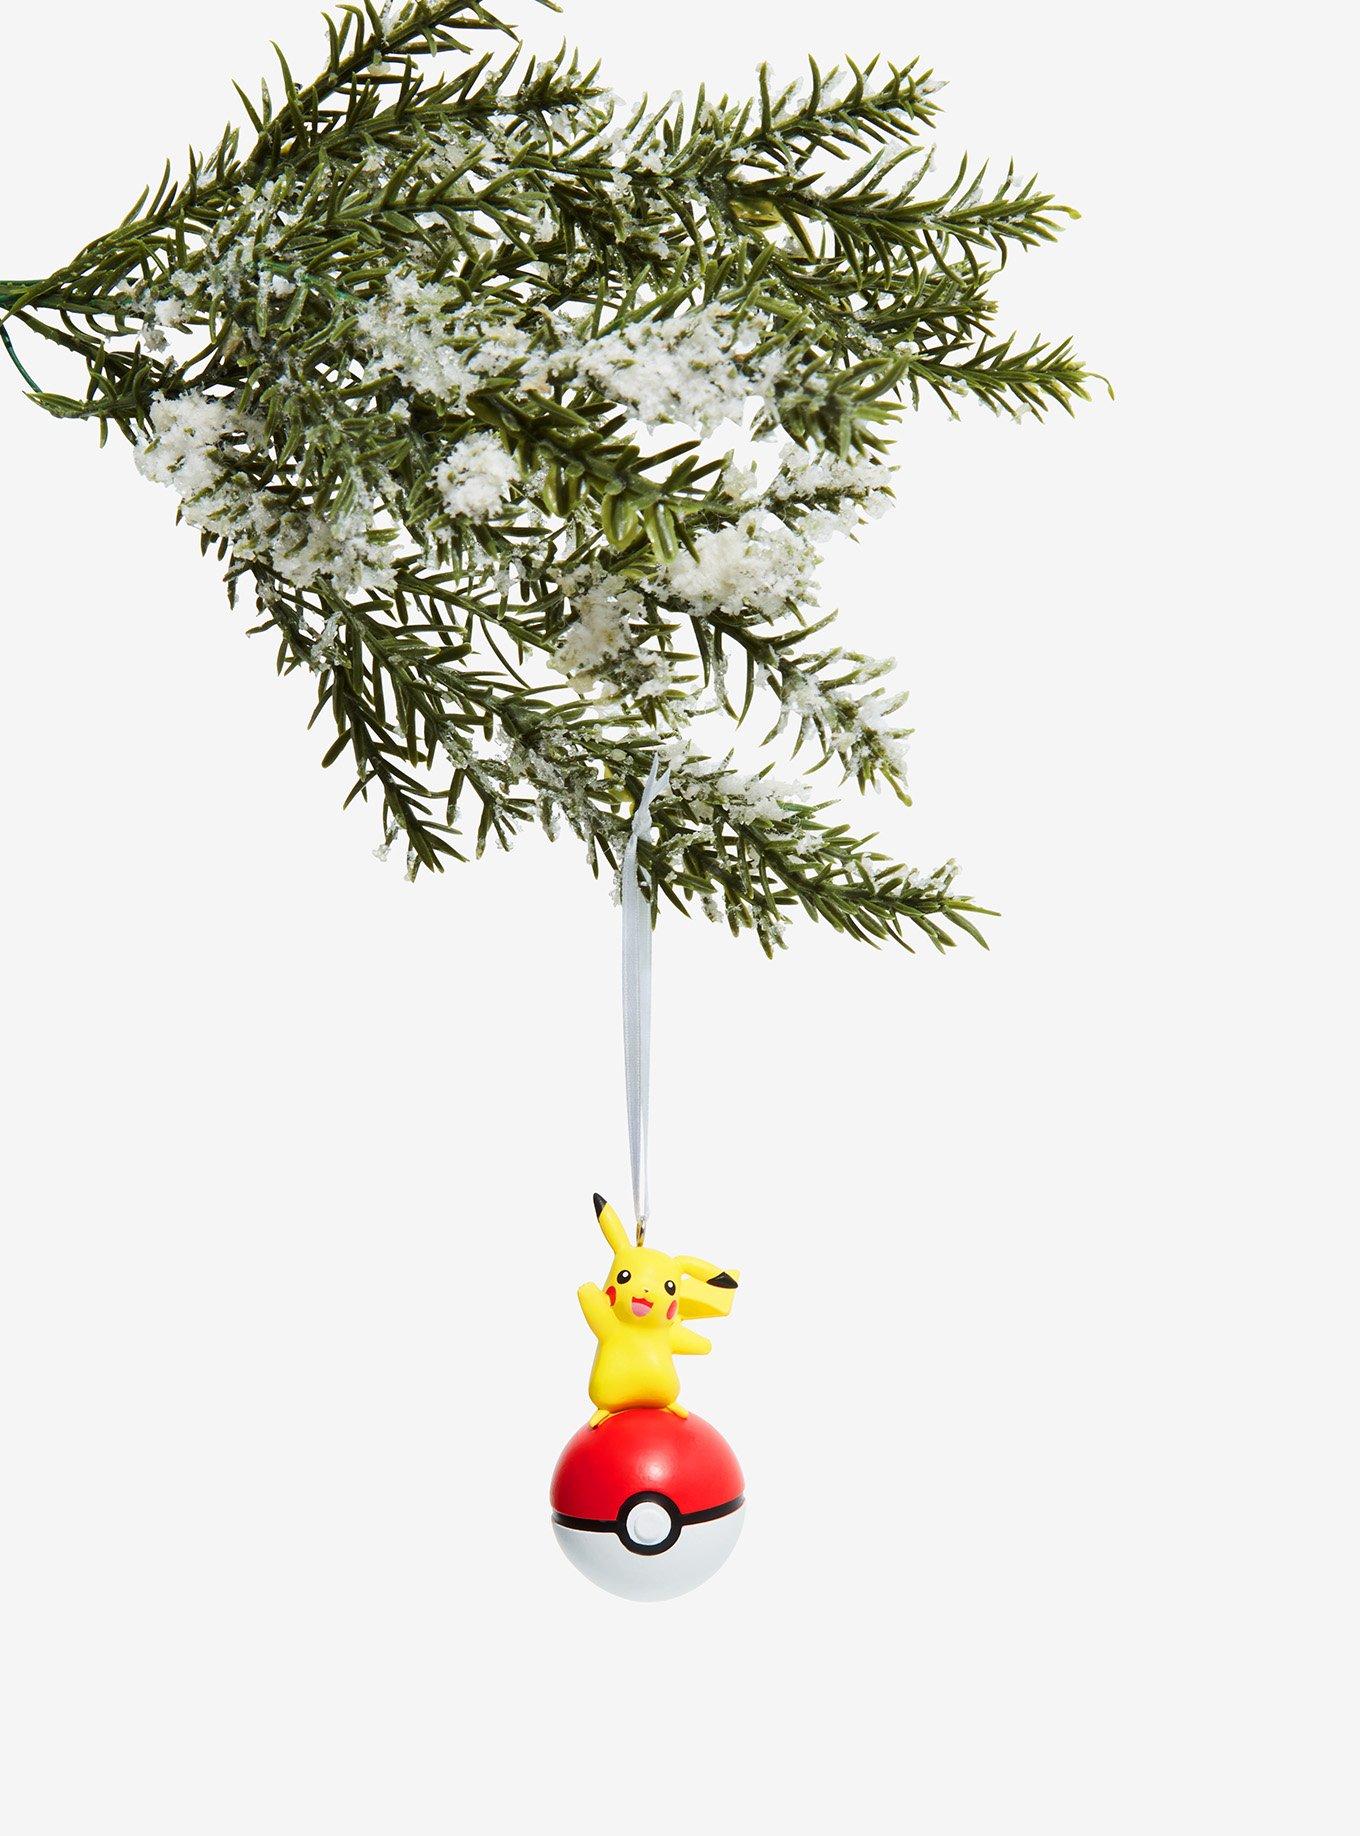 Pokemon Pikachu Hallmark Red Box Ornament - Hooked on Hallmark Ornaments